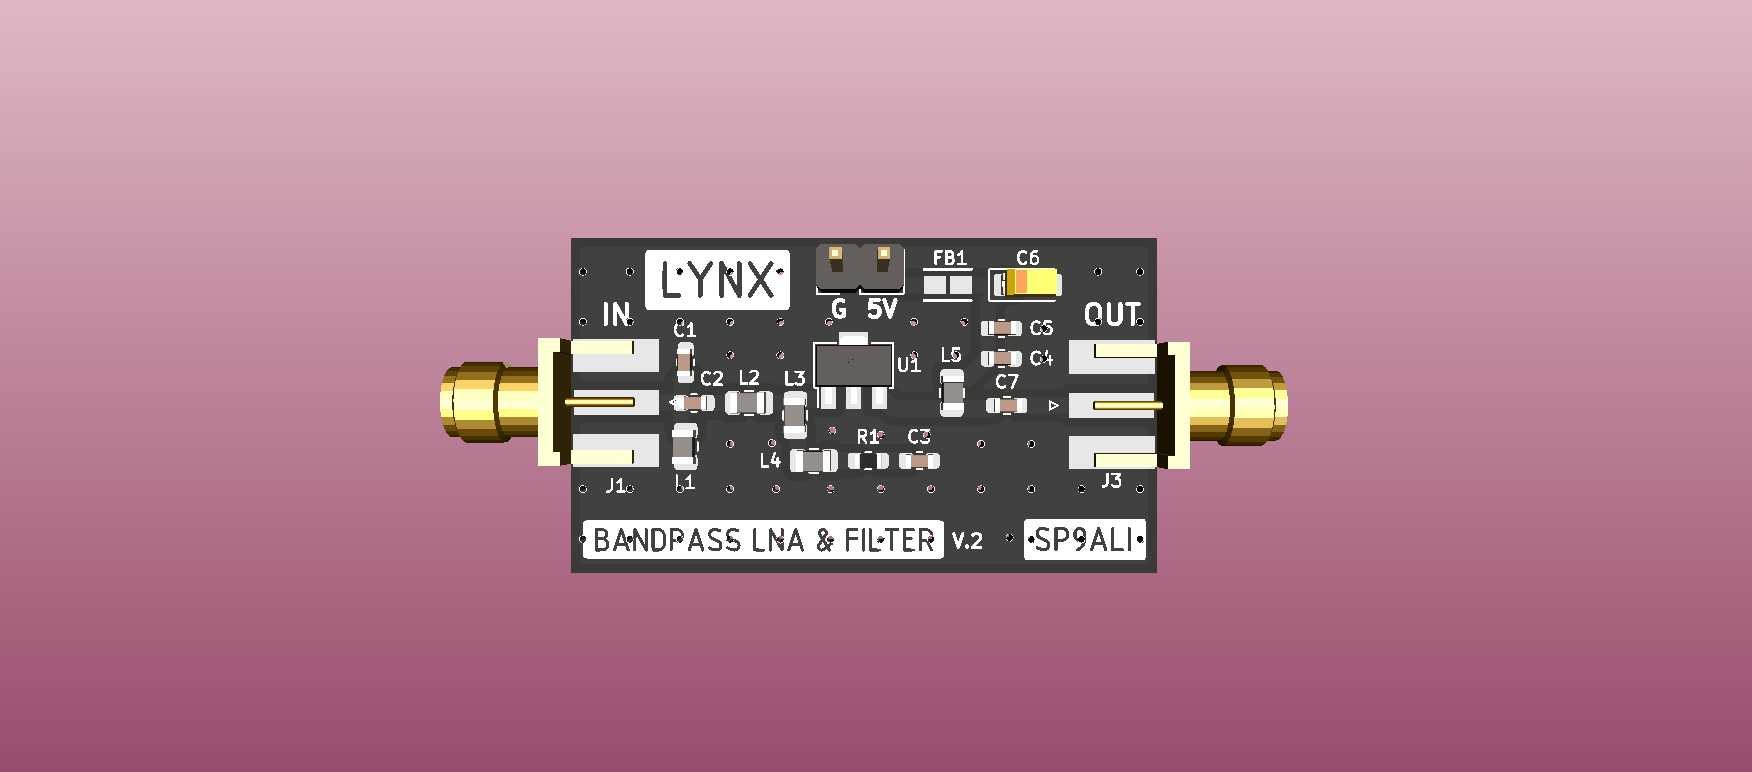 lynx.png